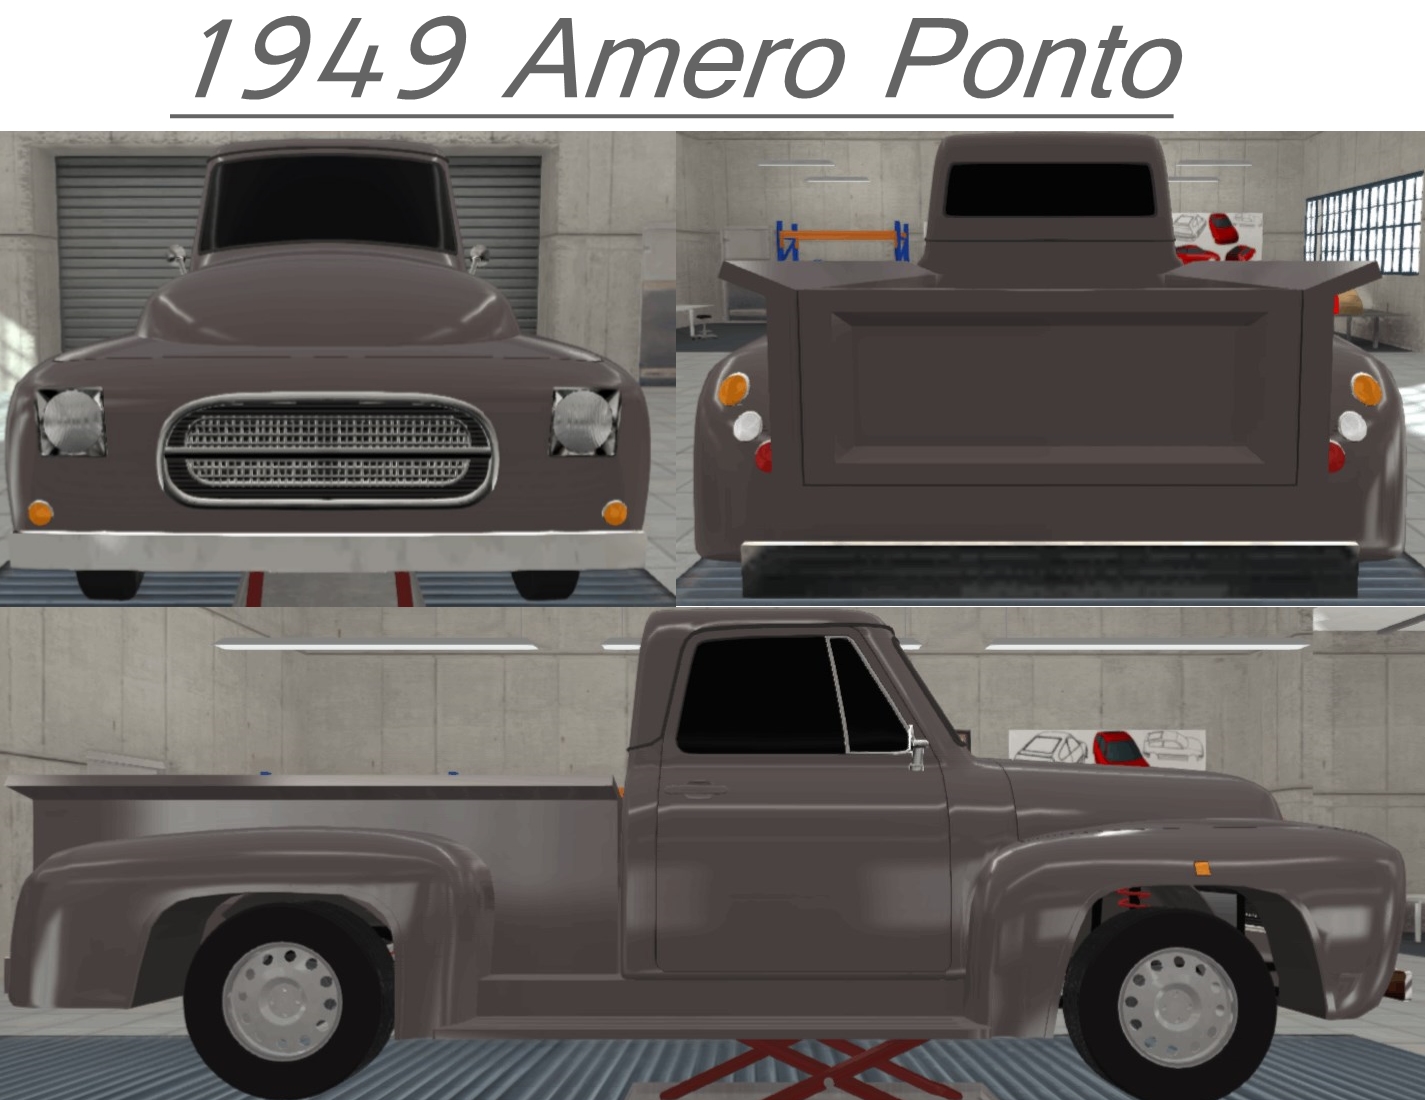 1949 Amero Ponto.jpg